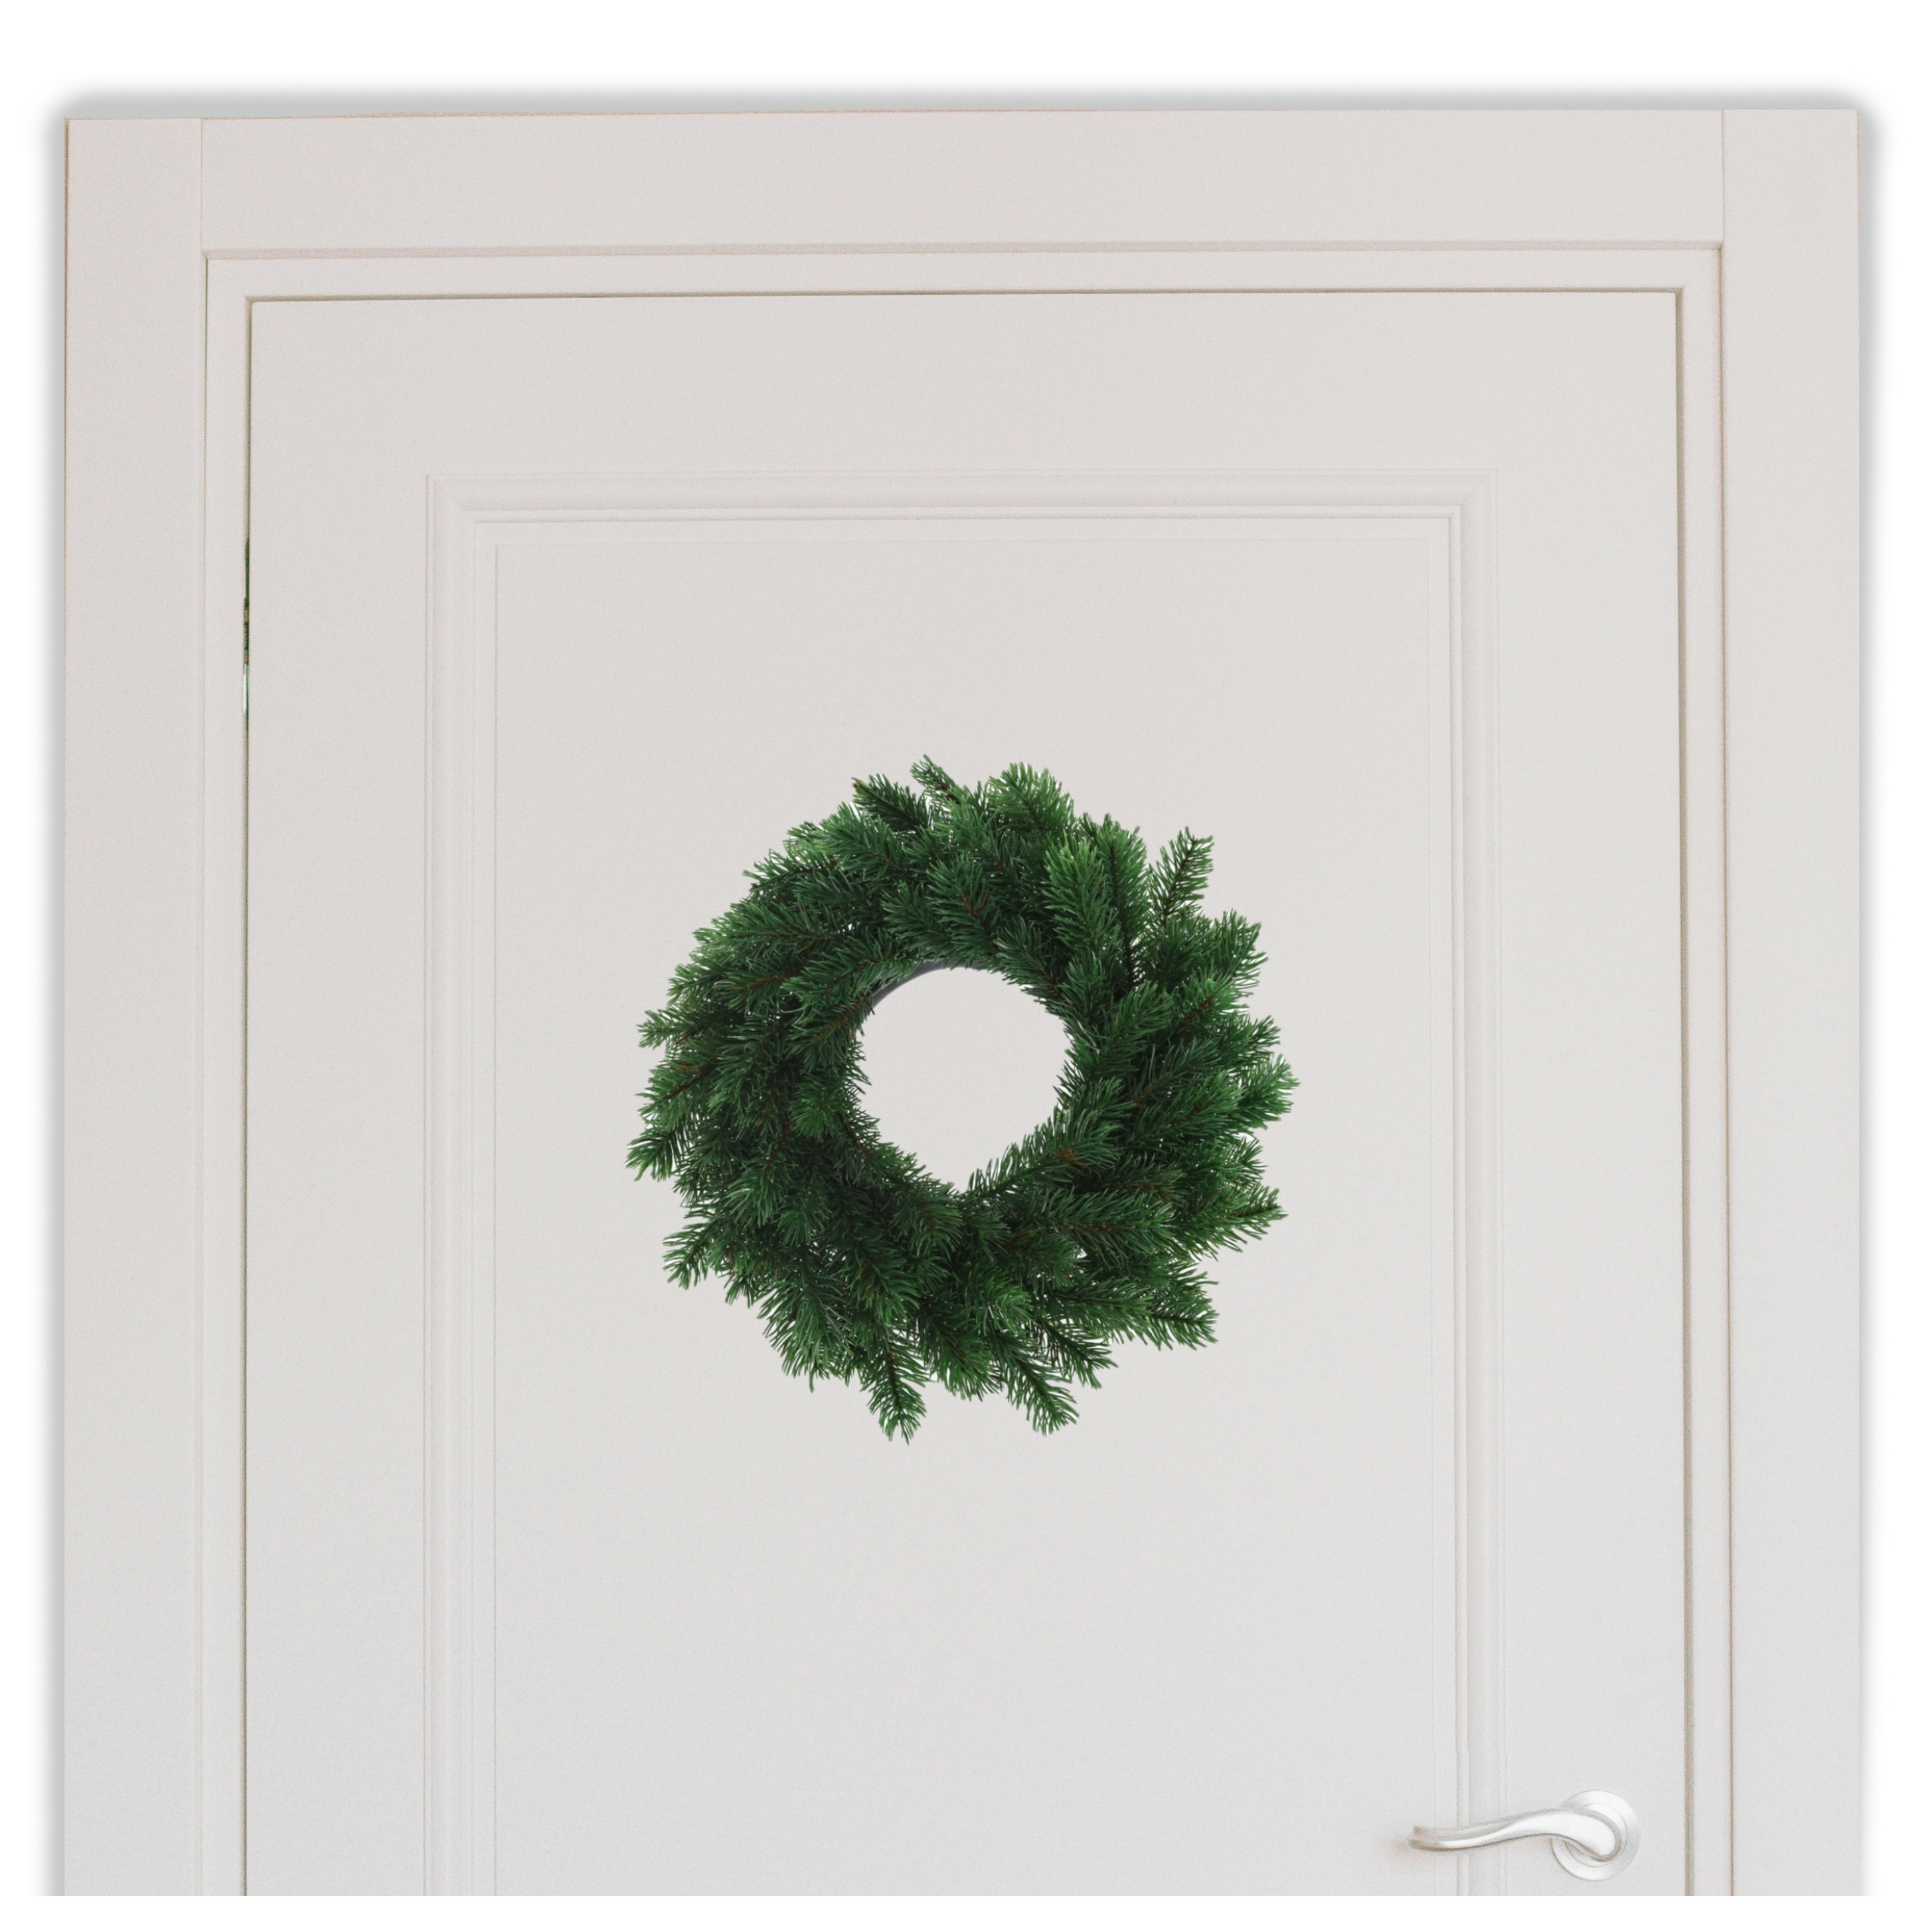 Kerstkrans-deurkrans groen 35 cm kerstversiering